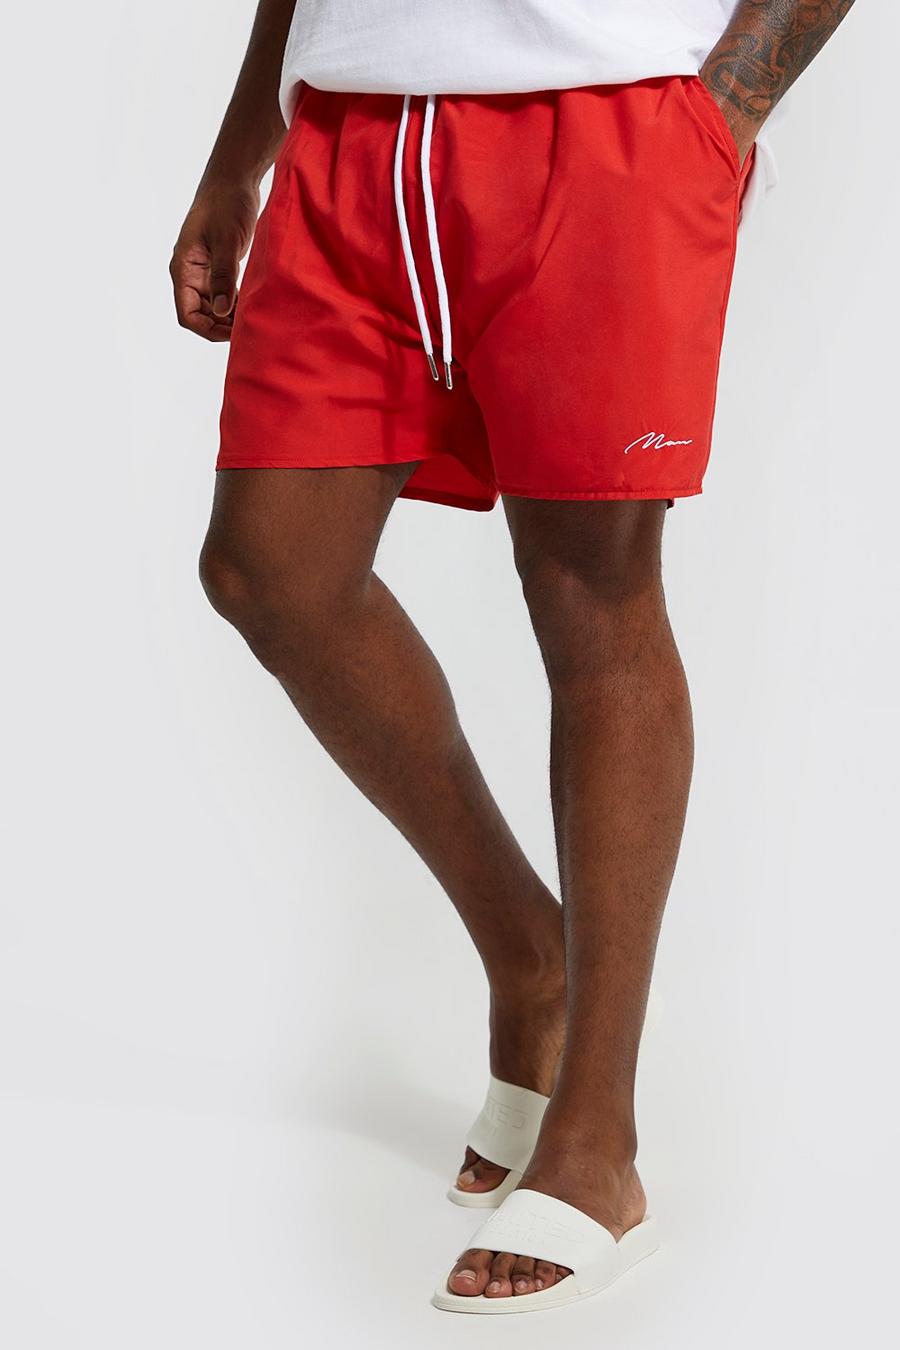 Costume a pantaloncino Plus Size in fibre riciclate con firma Man, Red